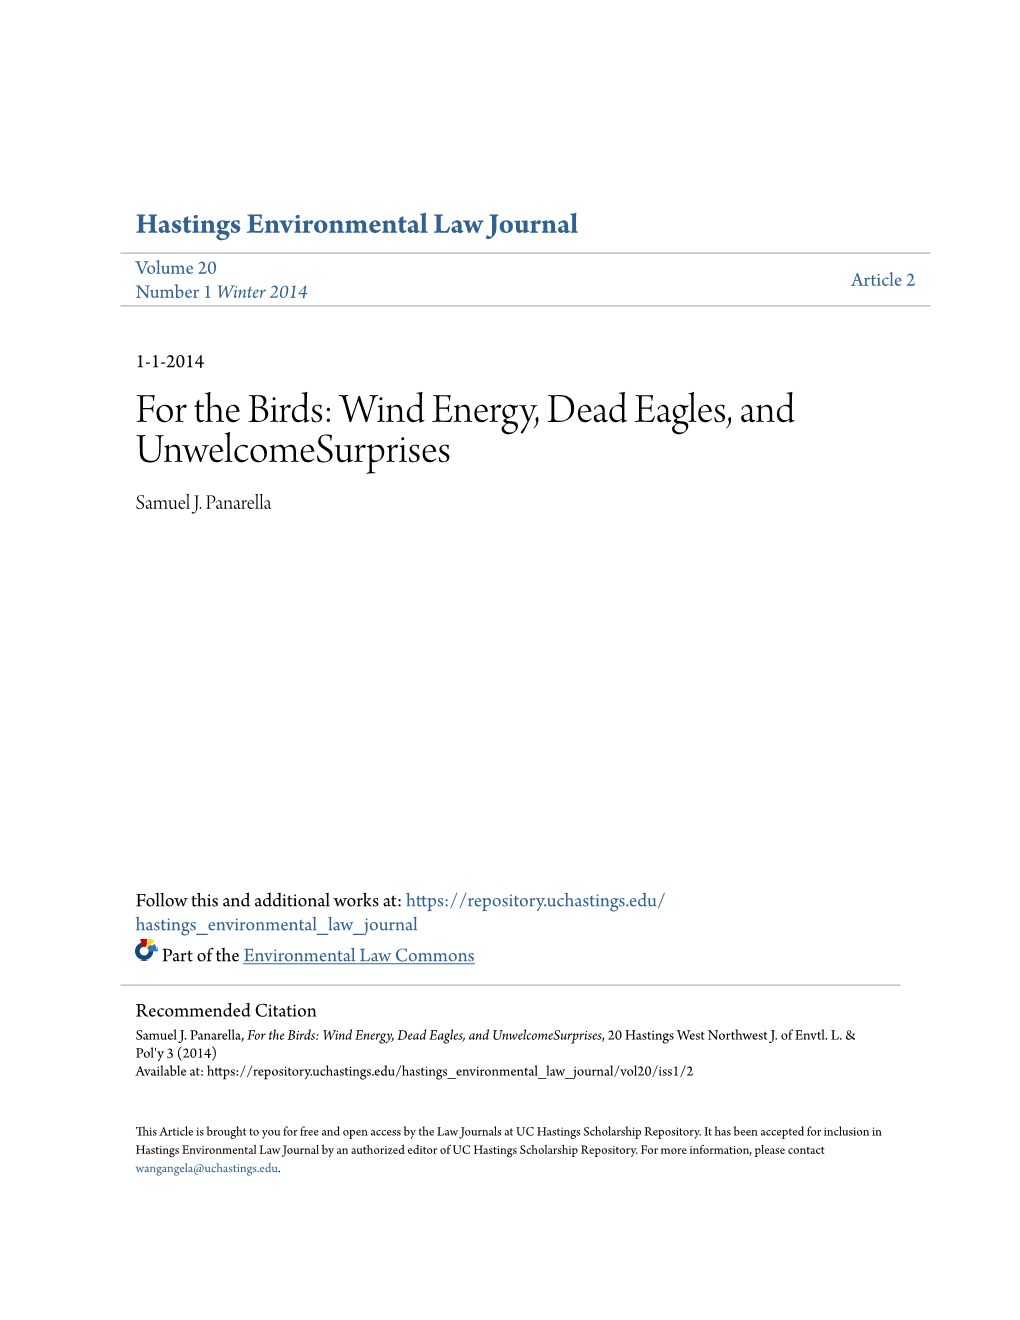 For the Birds: Wind Energy, Dead Eagles, and Unwelcomesurprises Samuel J